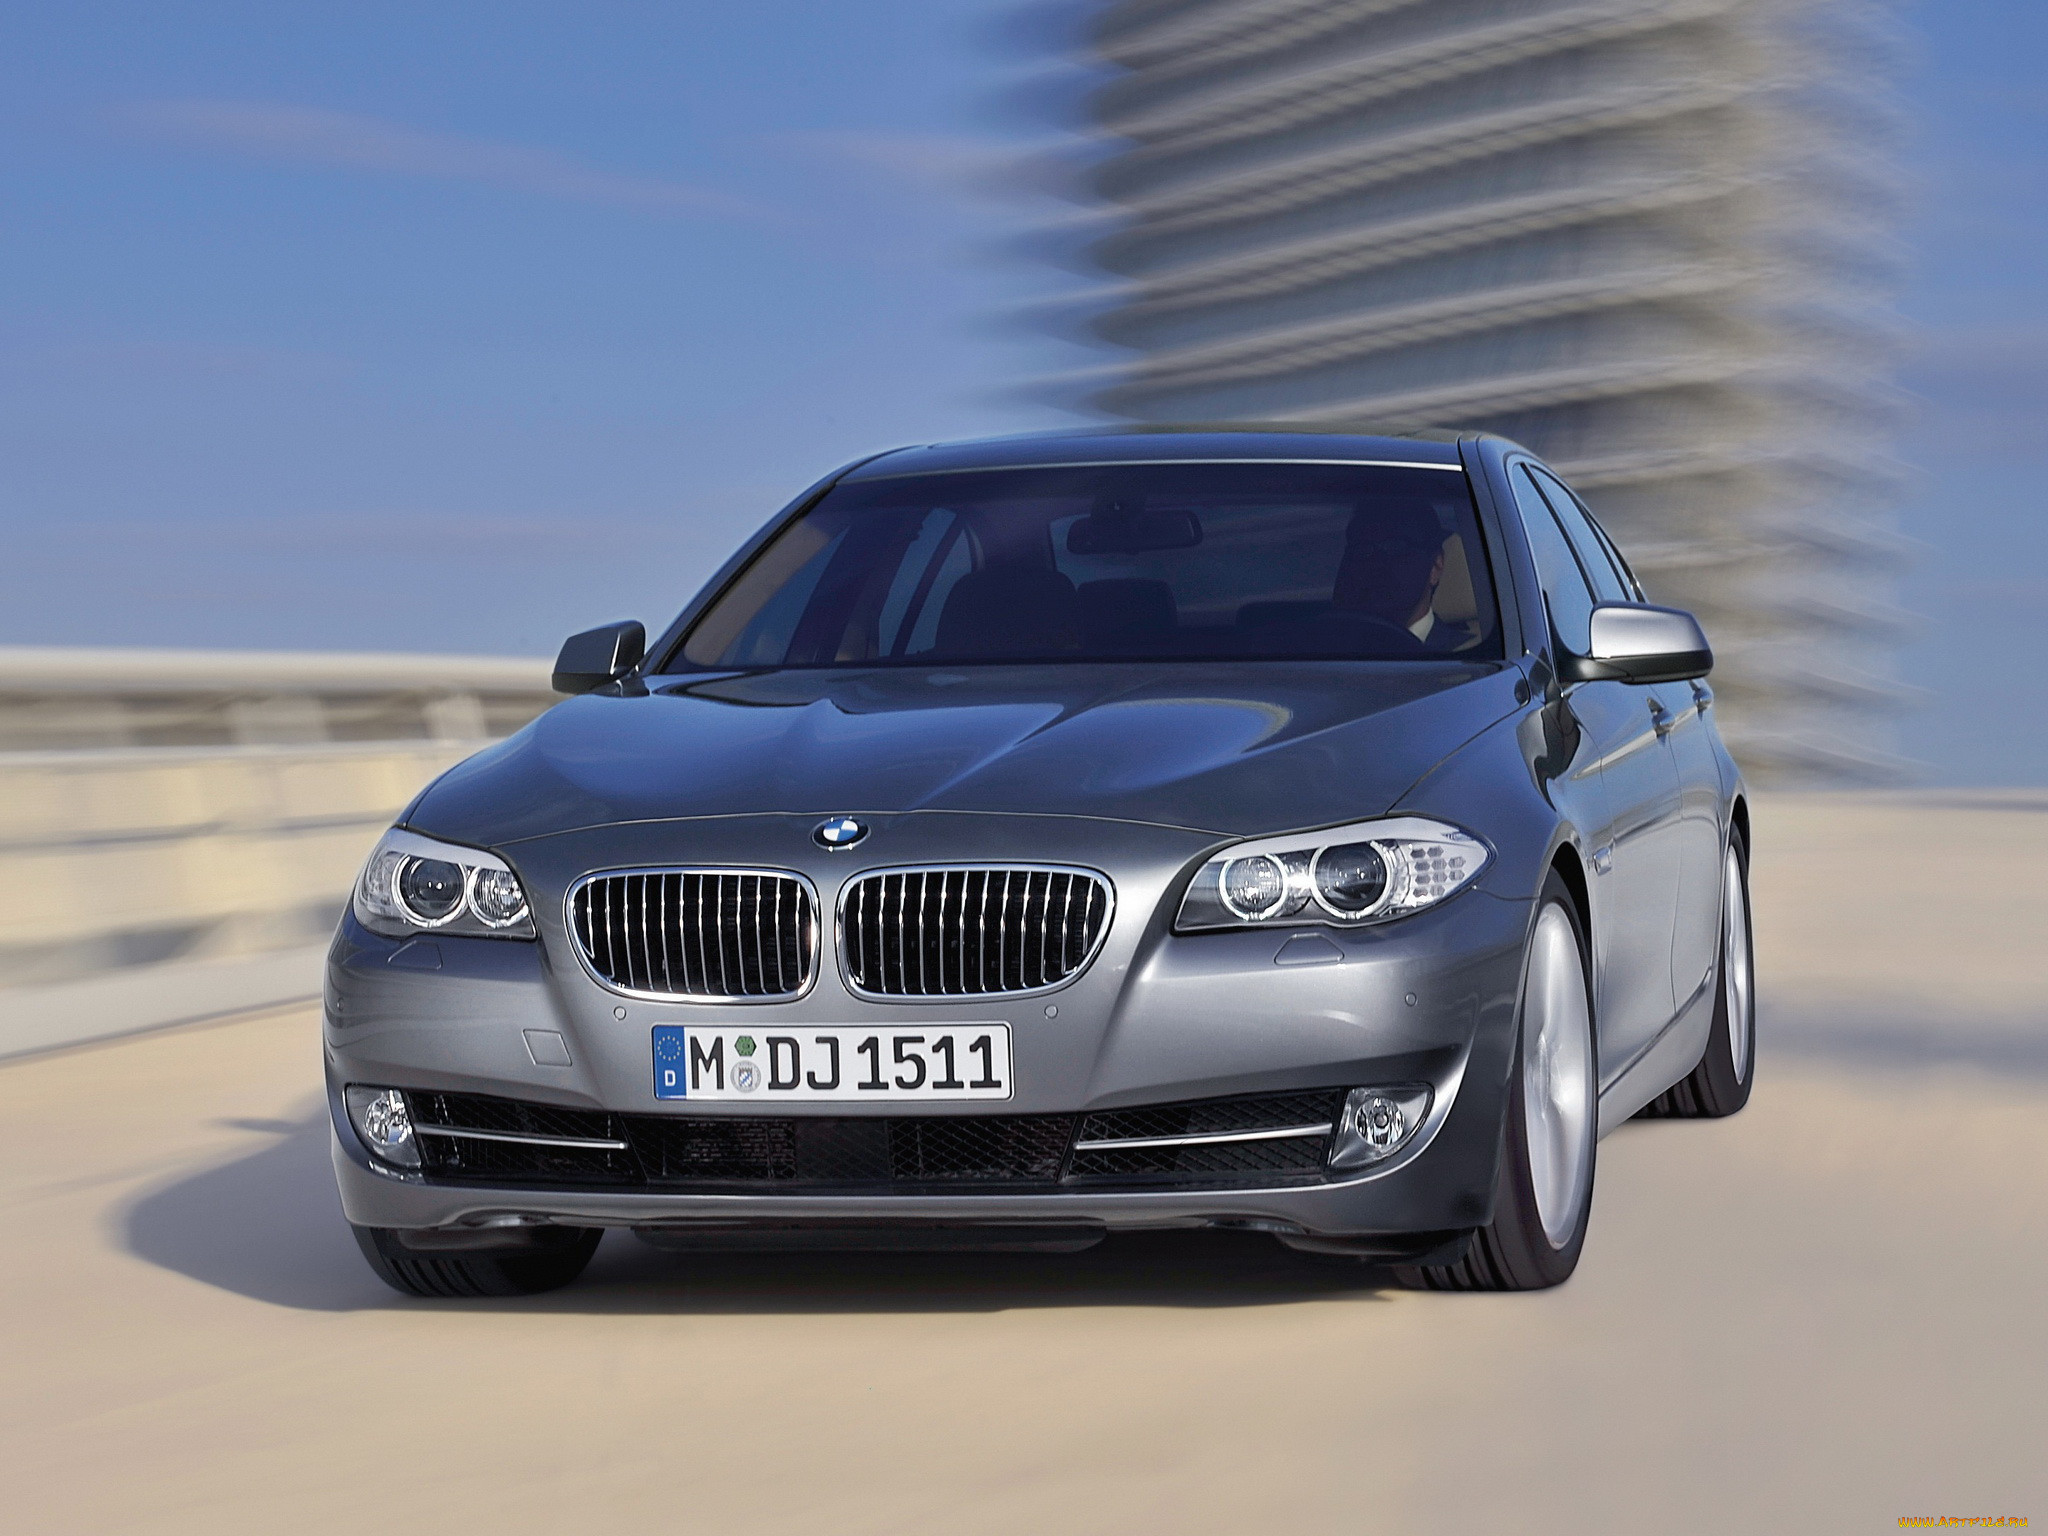 Bmw купить в германий. BMW 525 f10. BMW f10 535i. БМВ 523i 2011. BMW 520i Limousine.